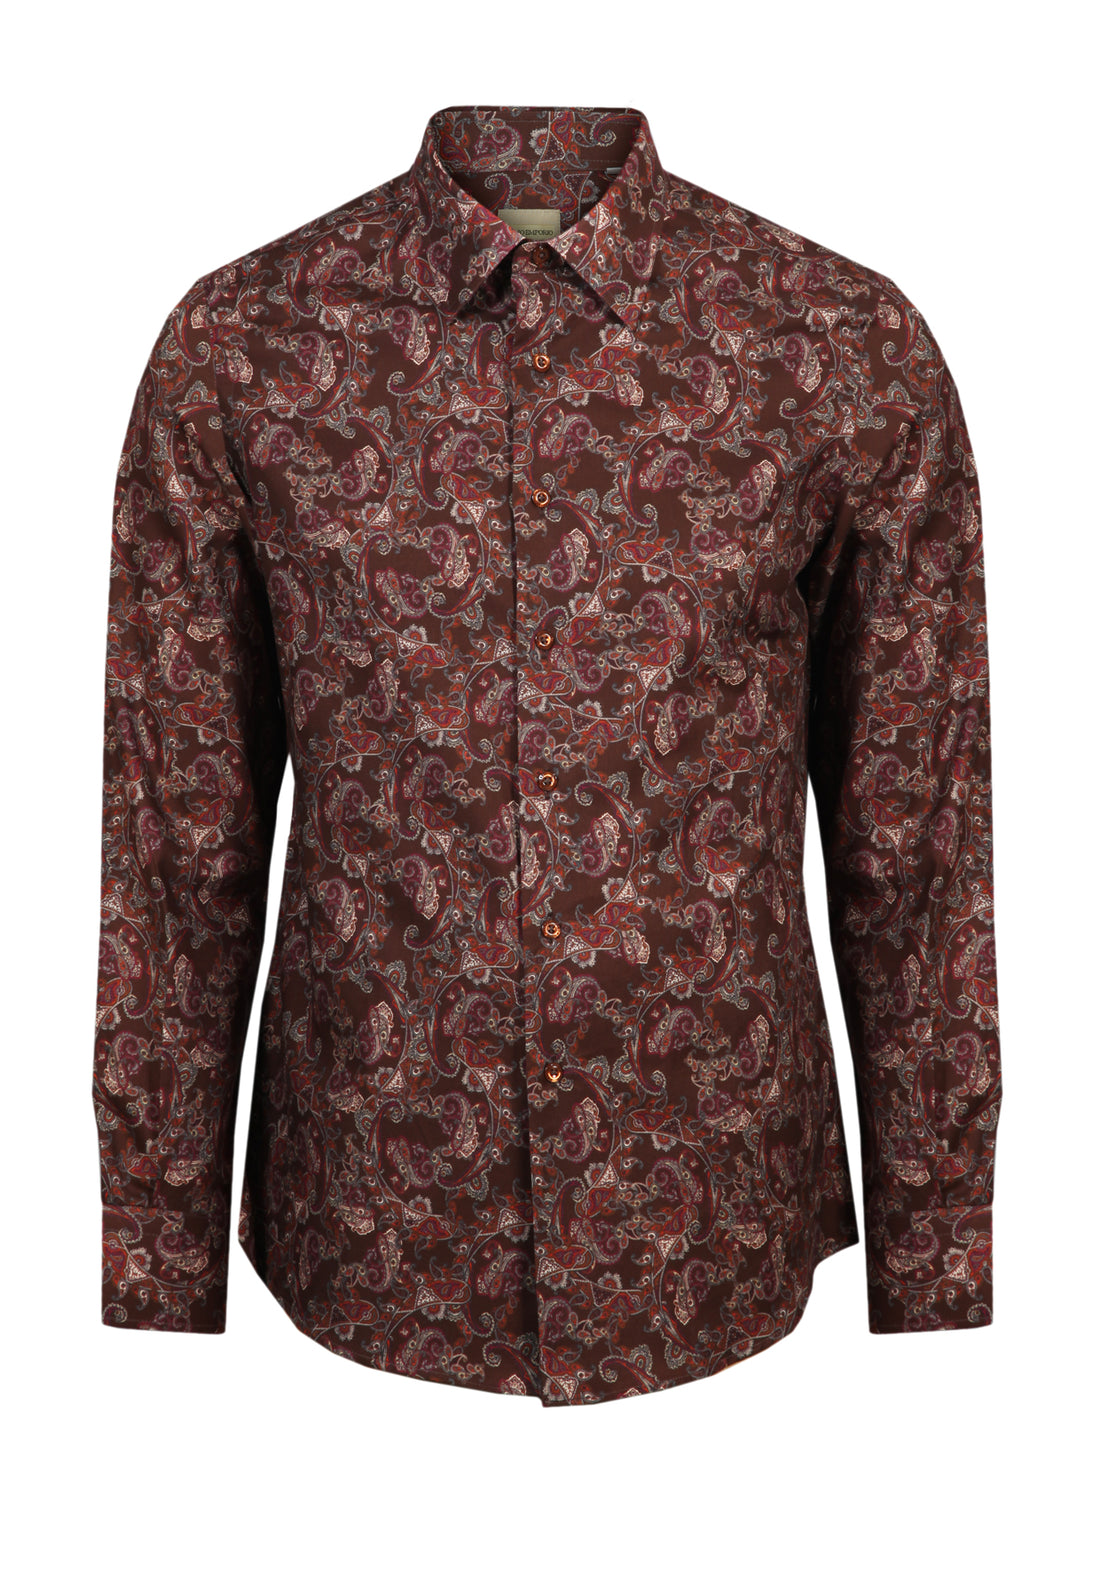 Bordeaux jacquard patterned shirt